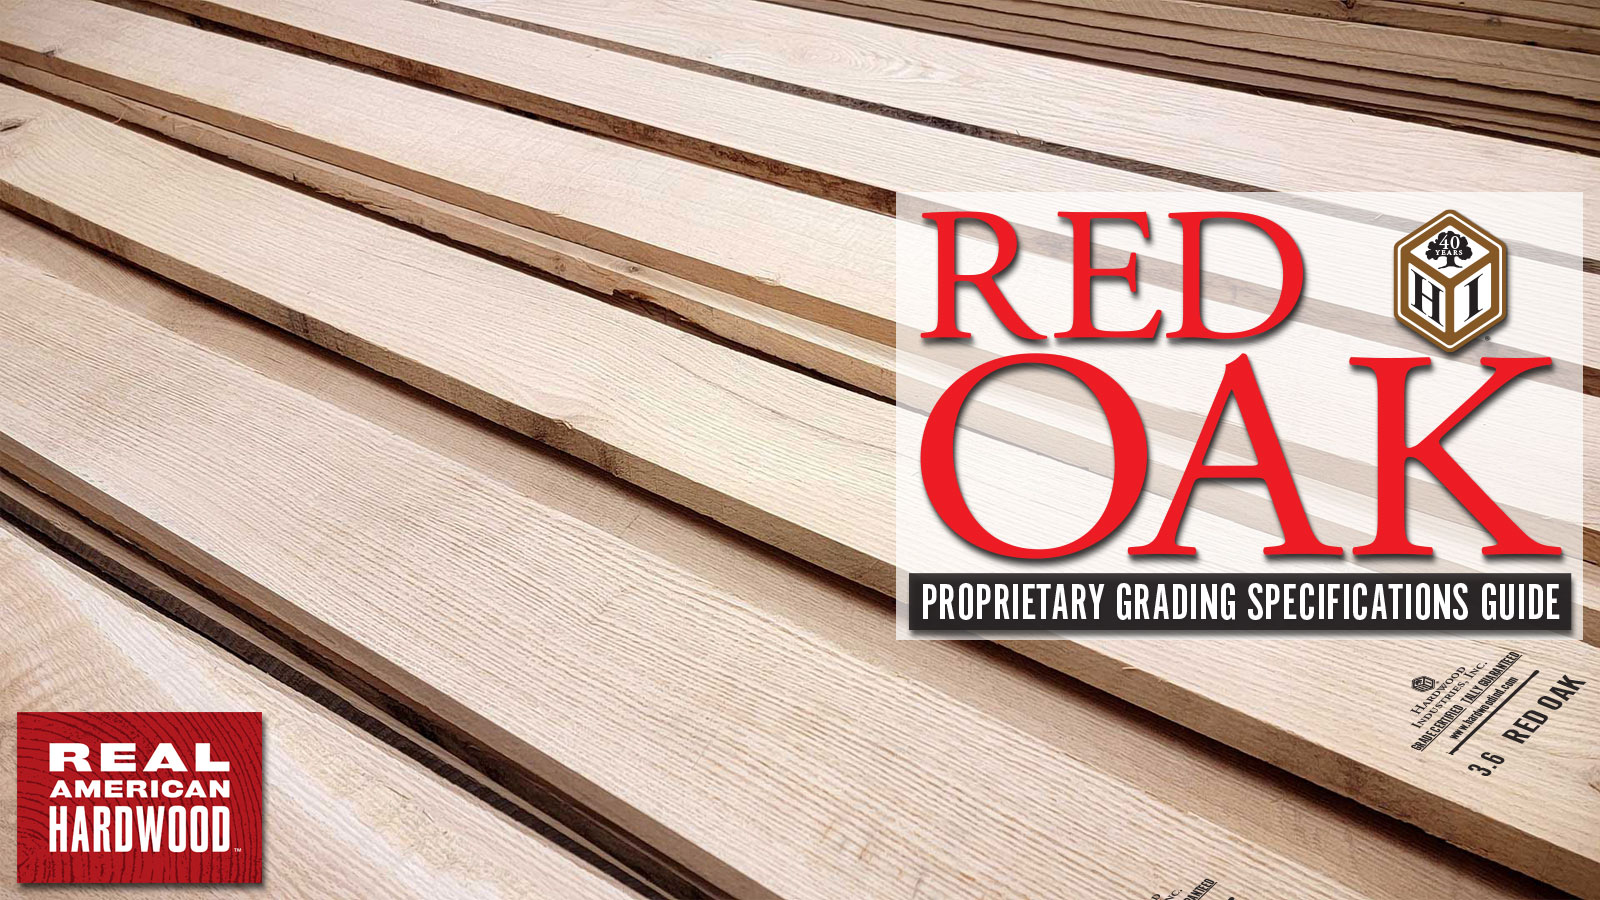 NEW! Red Oak Proprietary Grading Guide